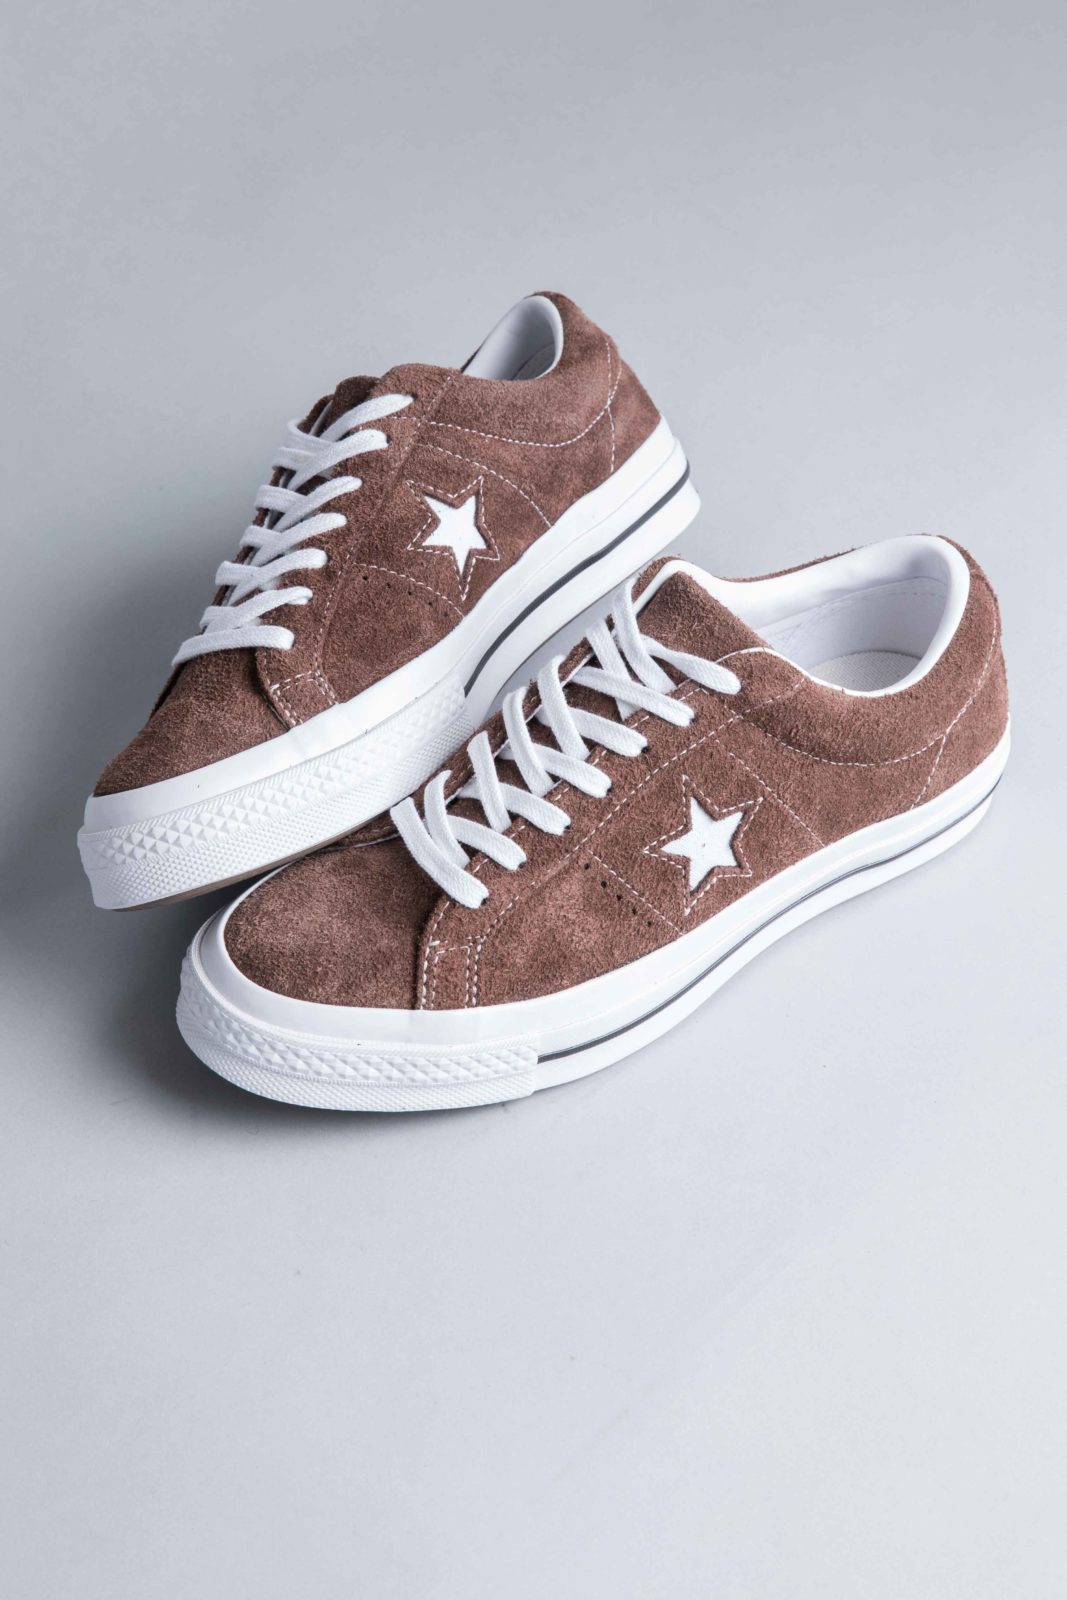 Converse One Star OX Chocolate sneaker 